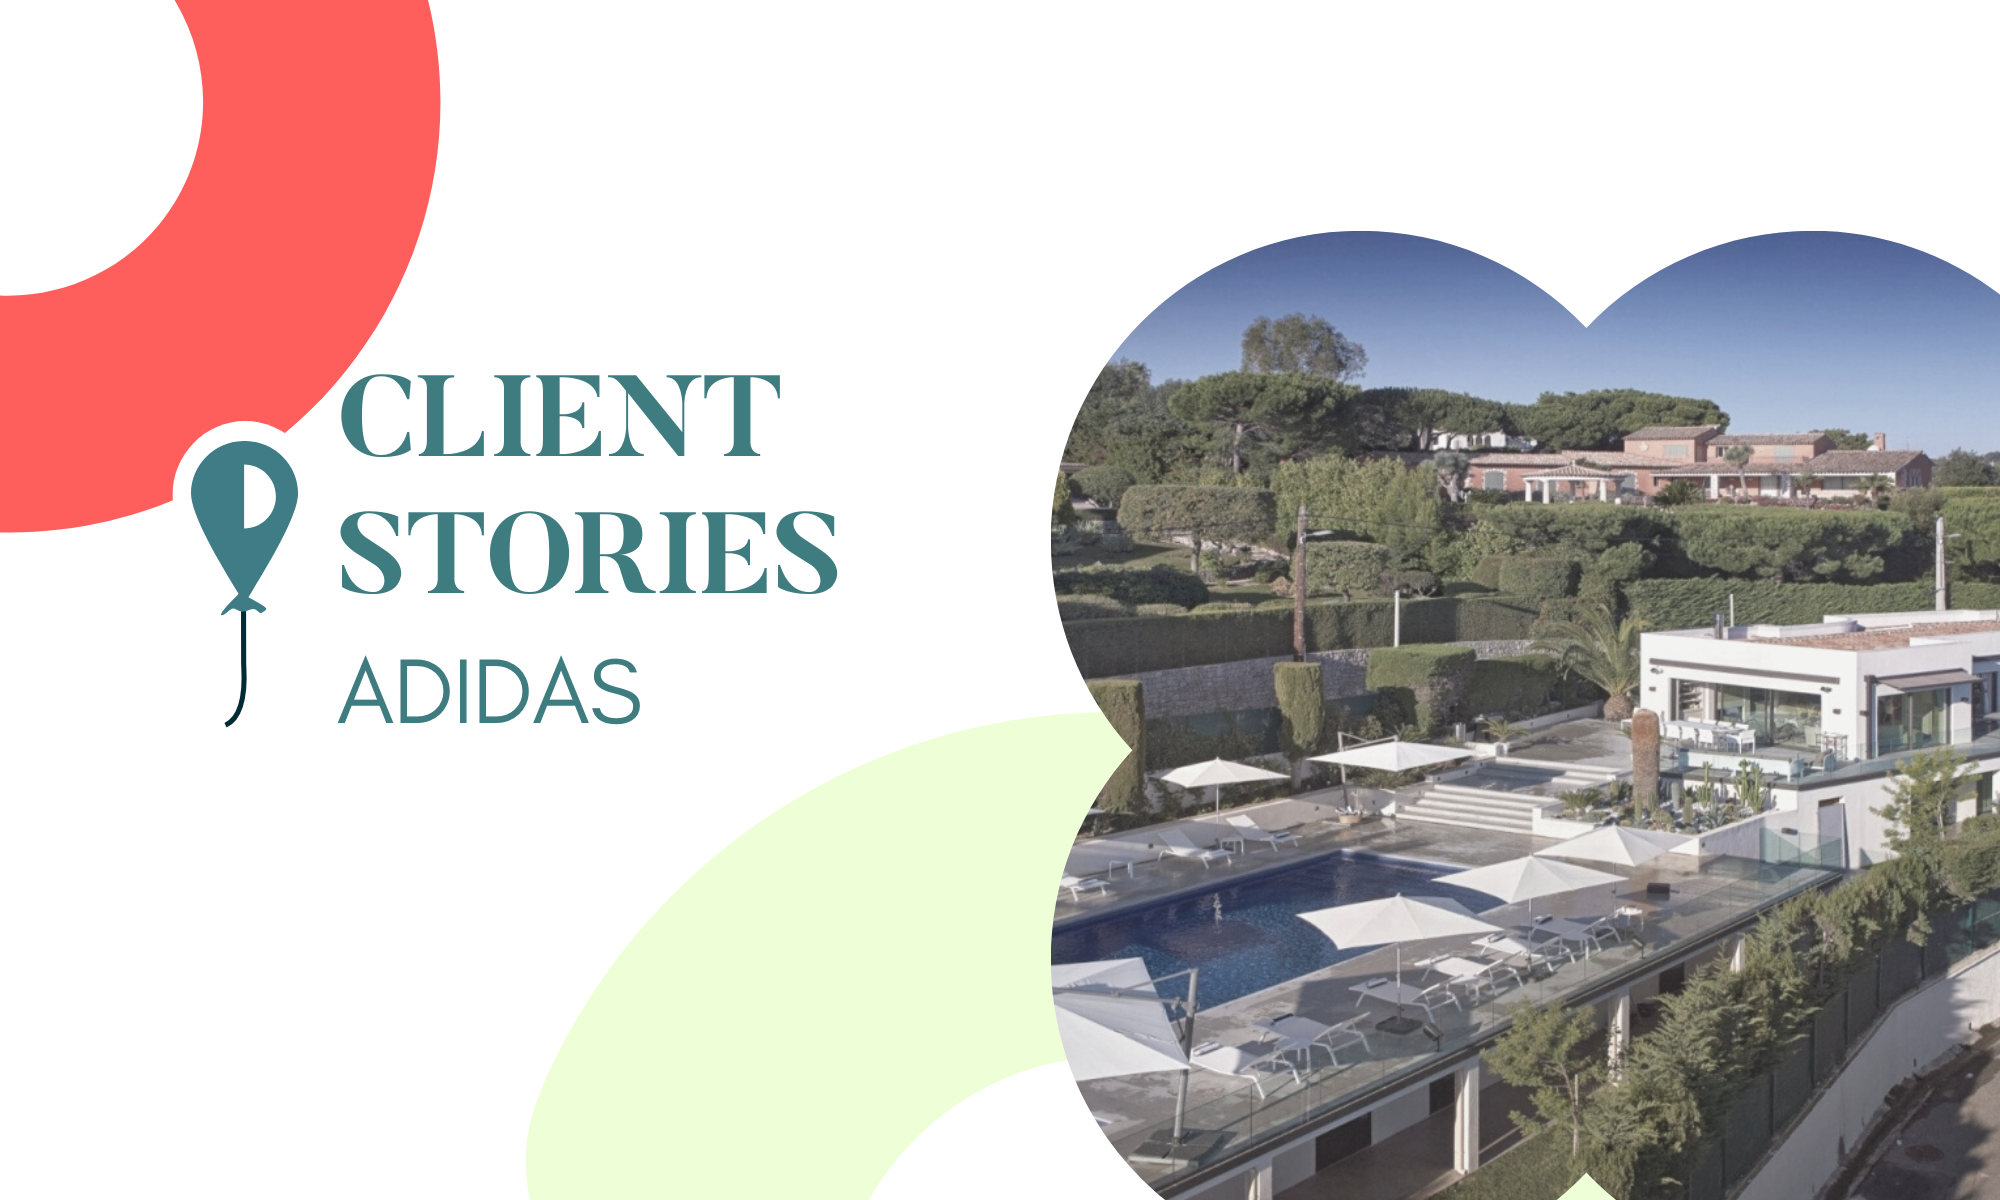 Client stories - Adidas